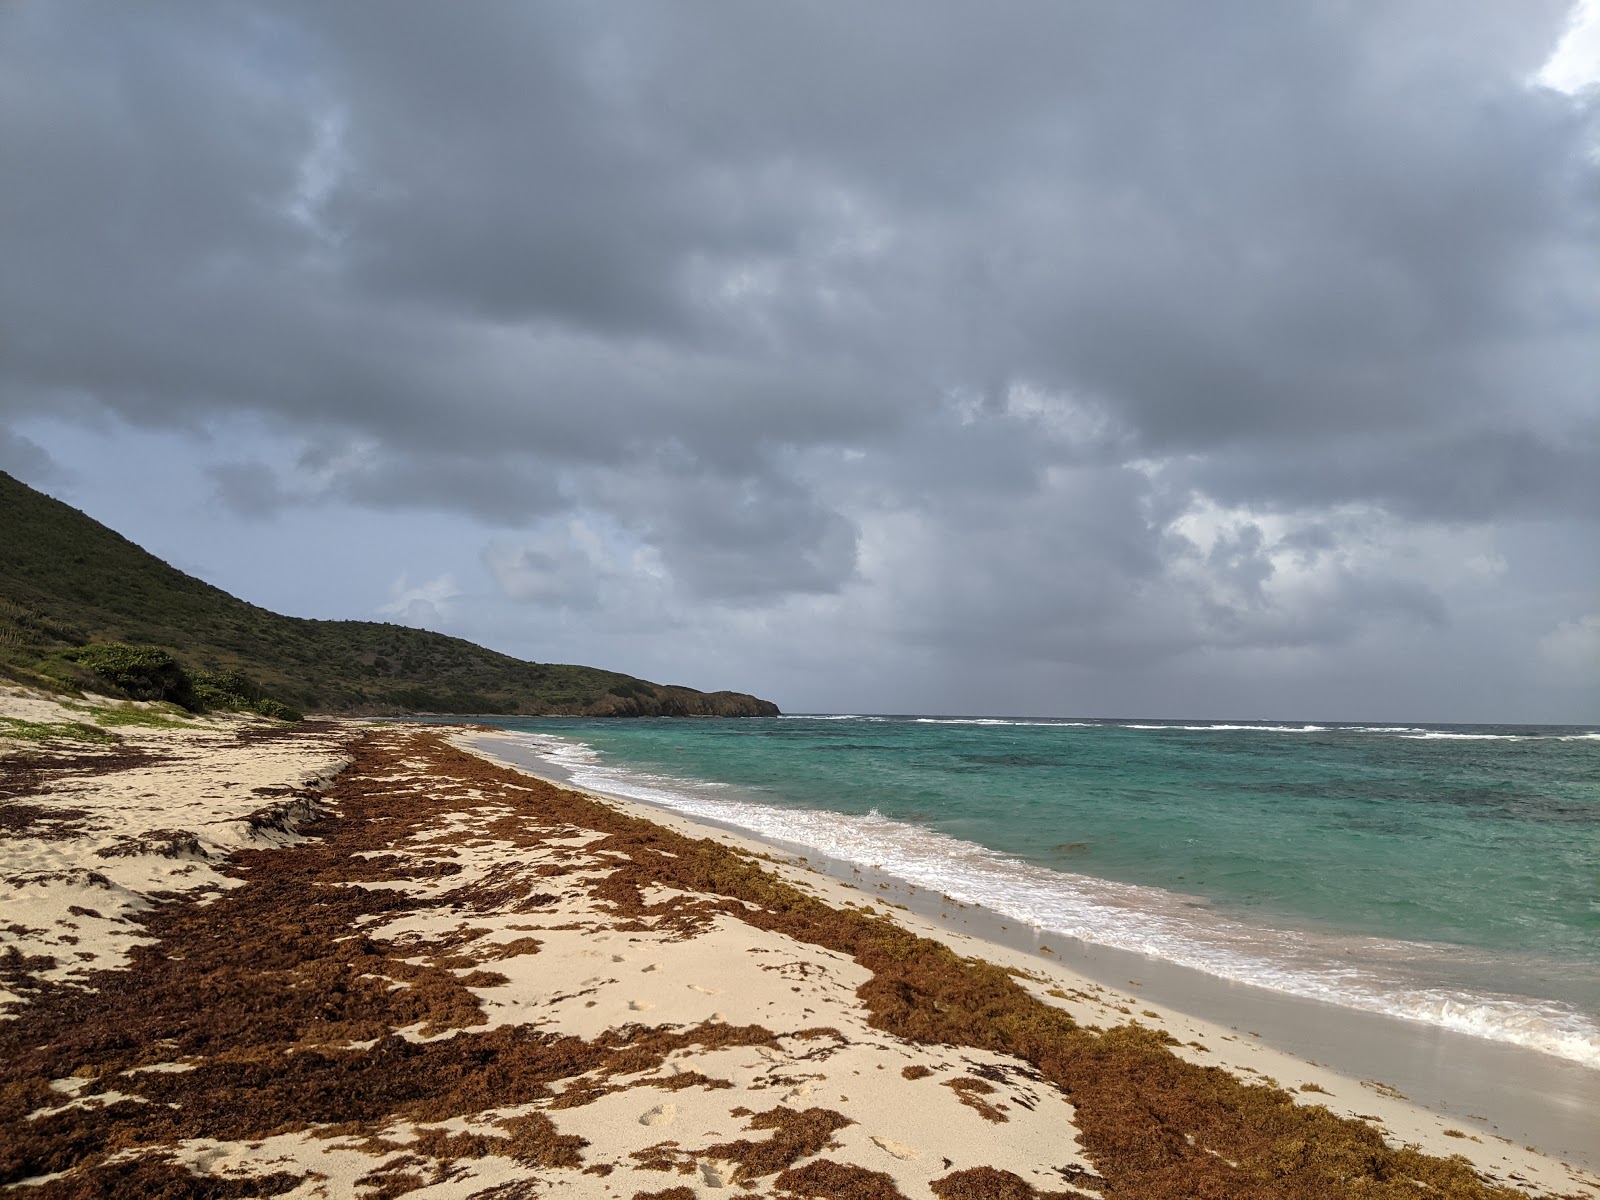 Foto di Isaacs Bay beach ubicato in zona naturale